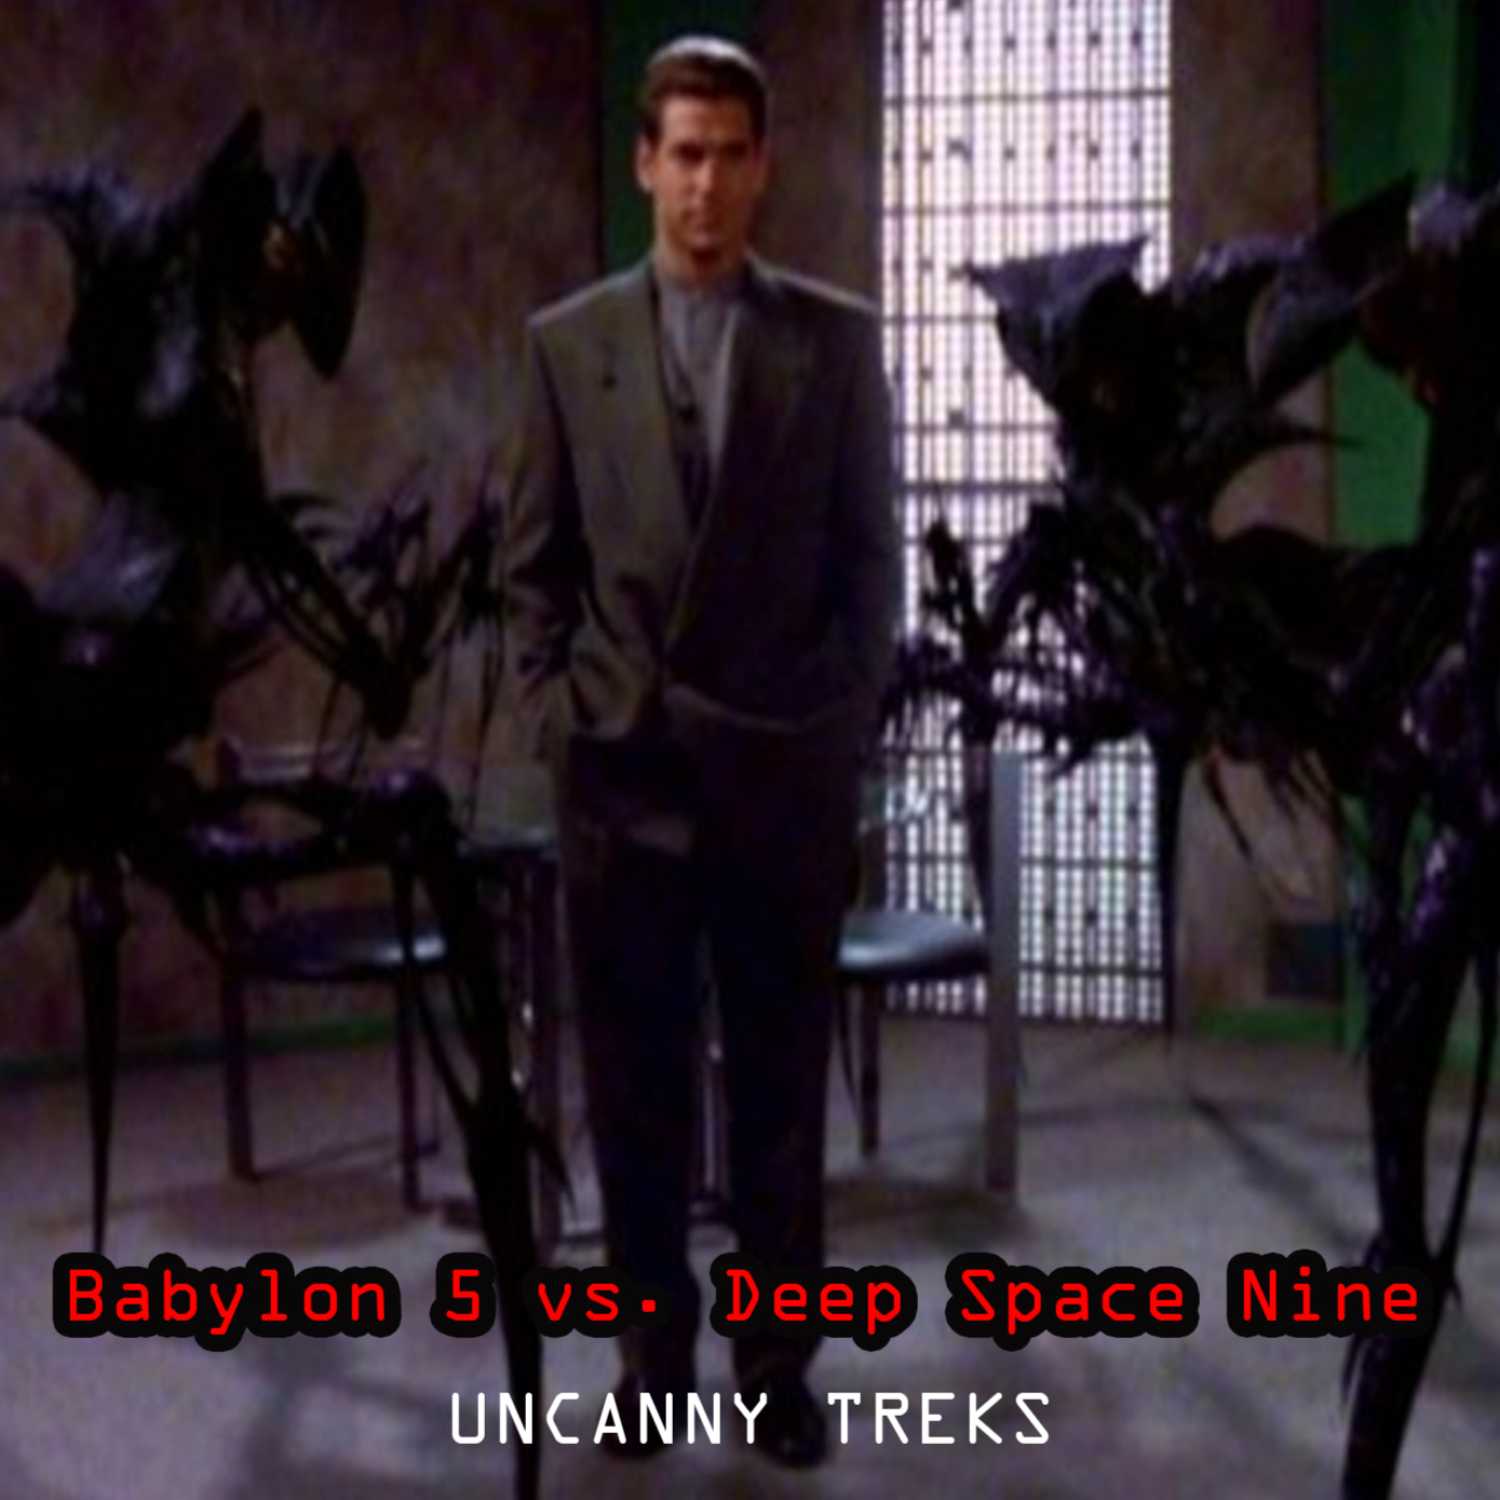 Babylon 5 vs. Deep Space Nine- 